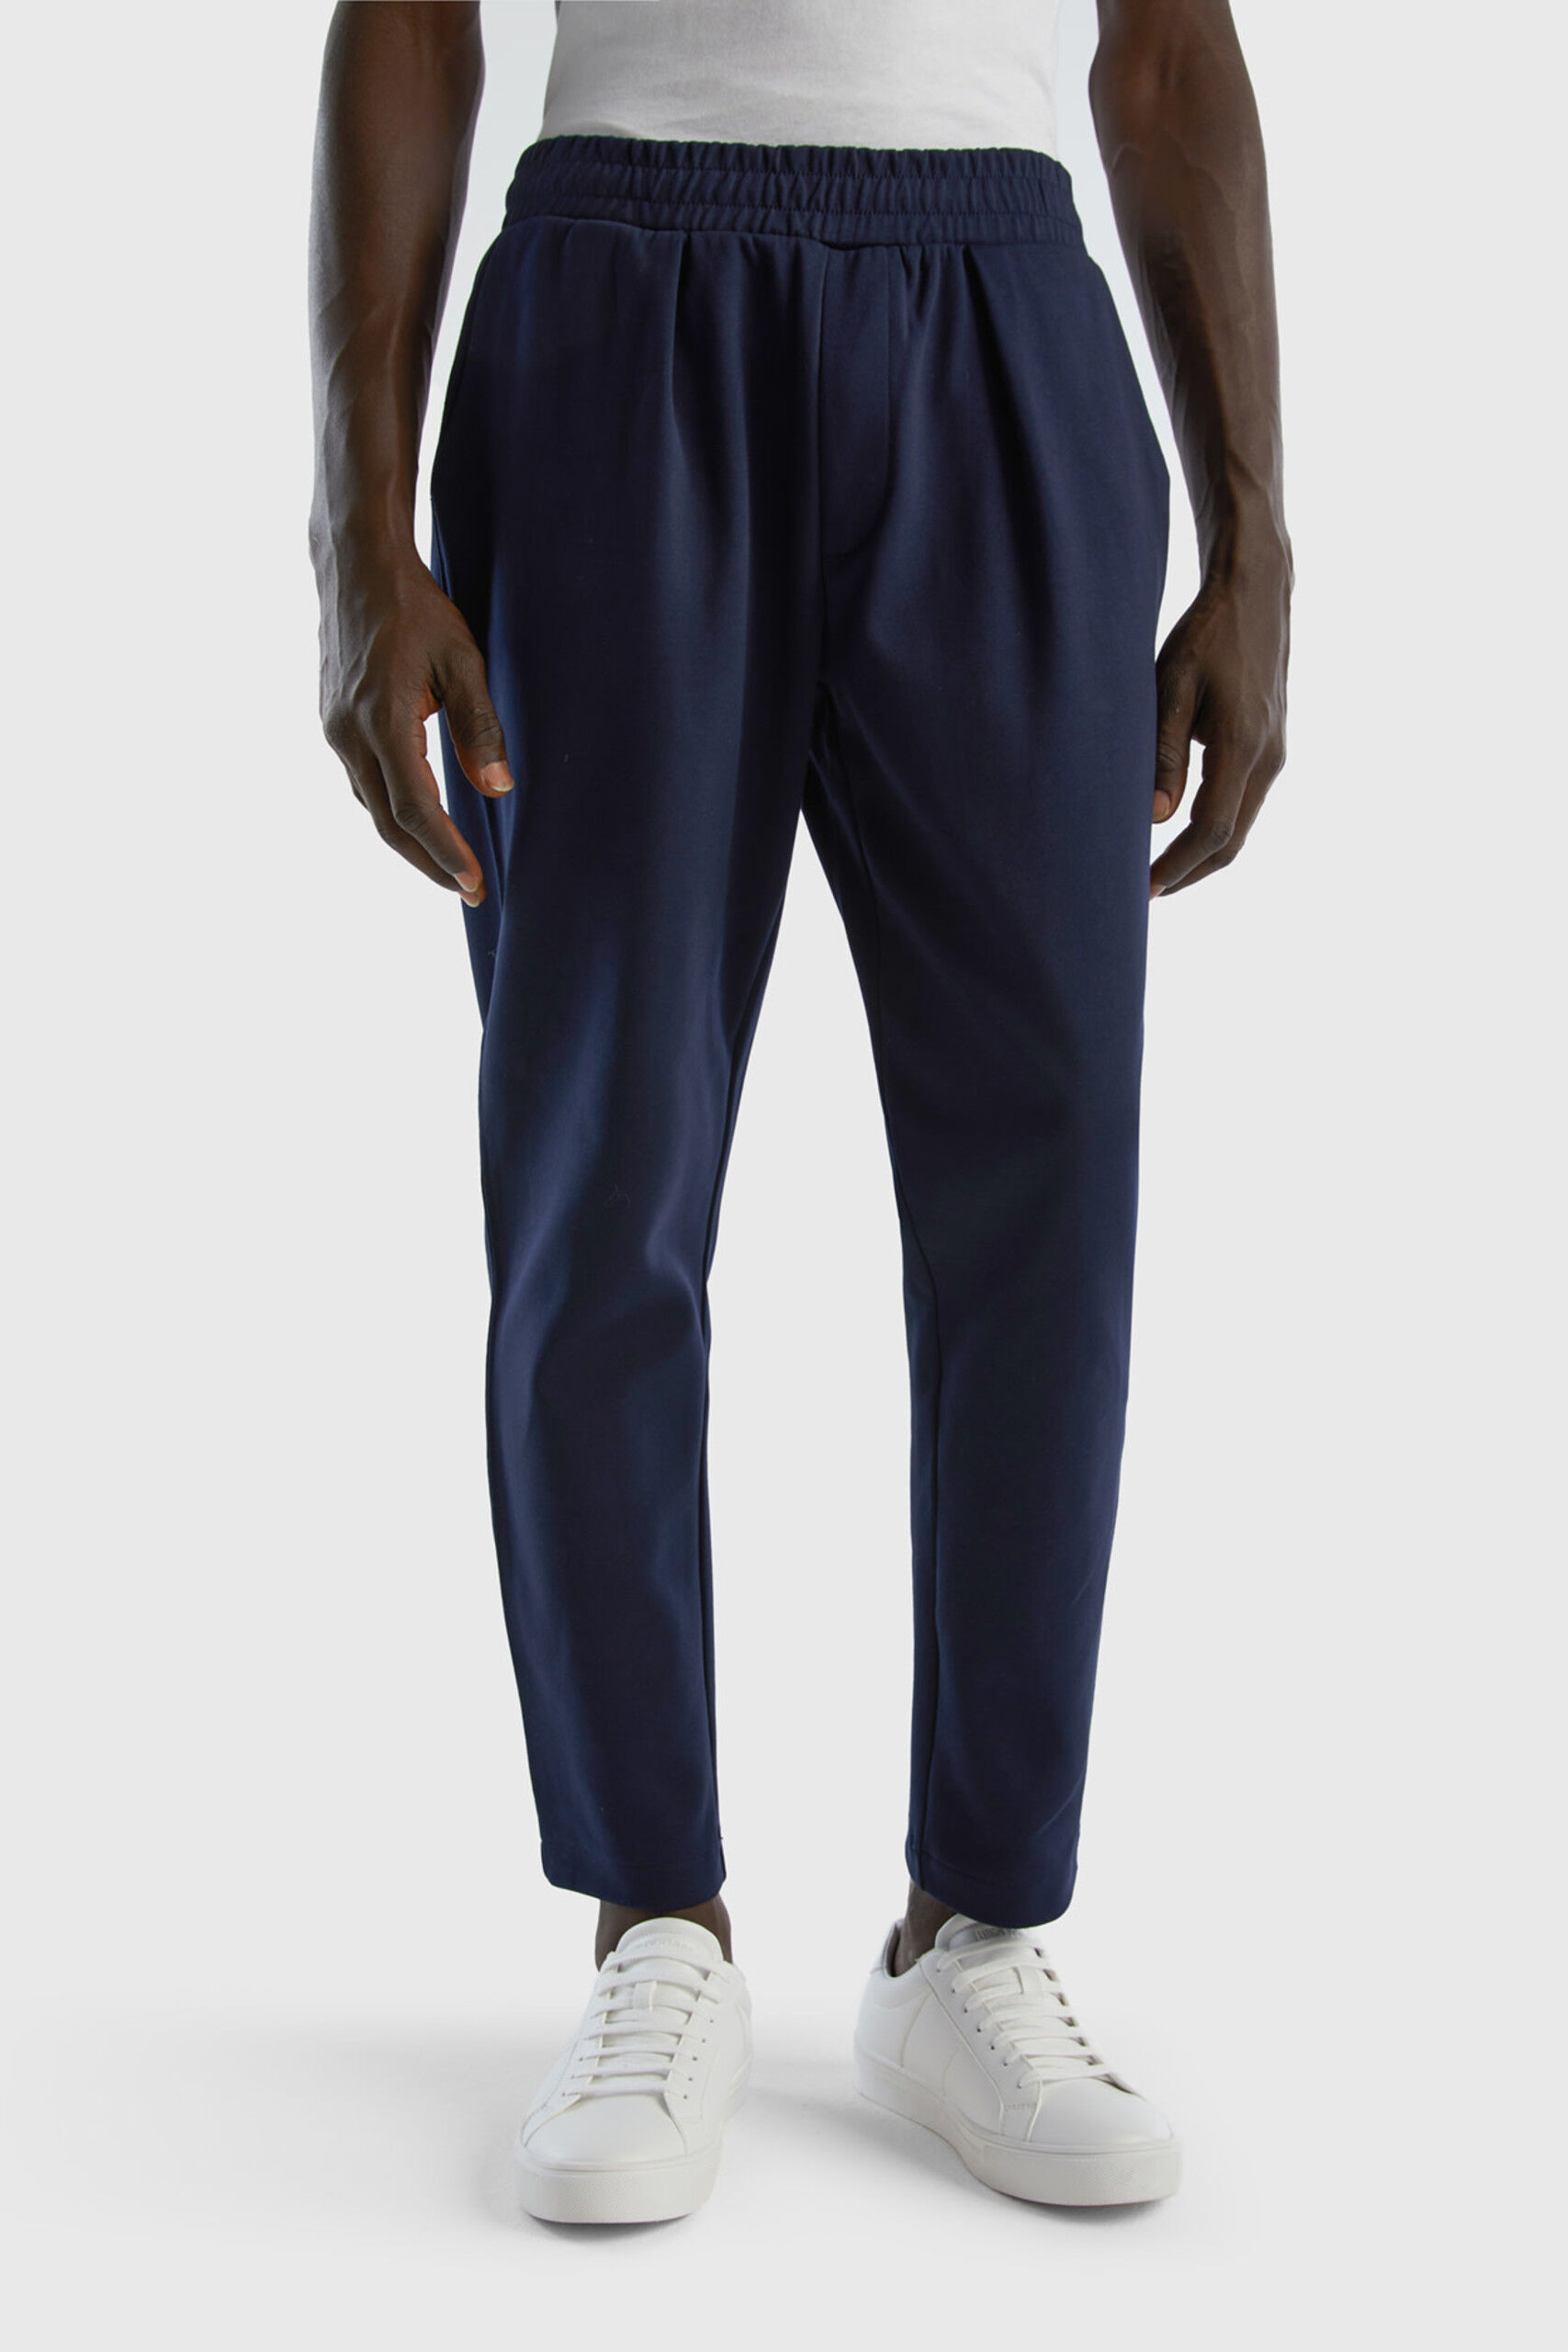 Men's Knit Pants New Collection 2021 | Benetton